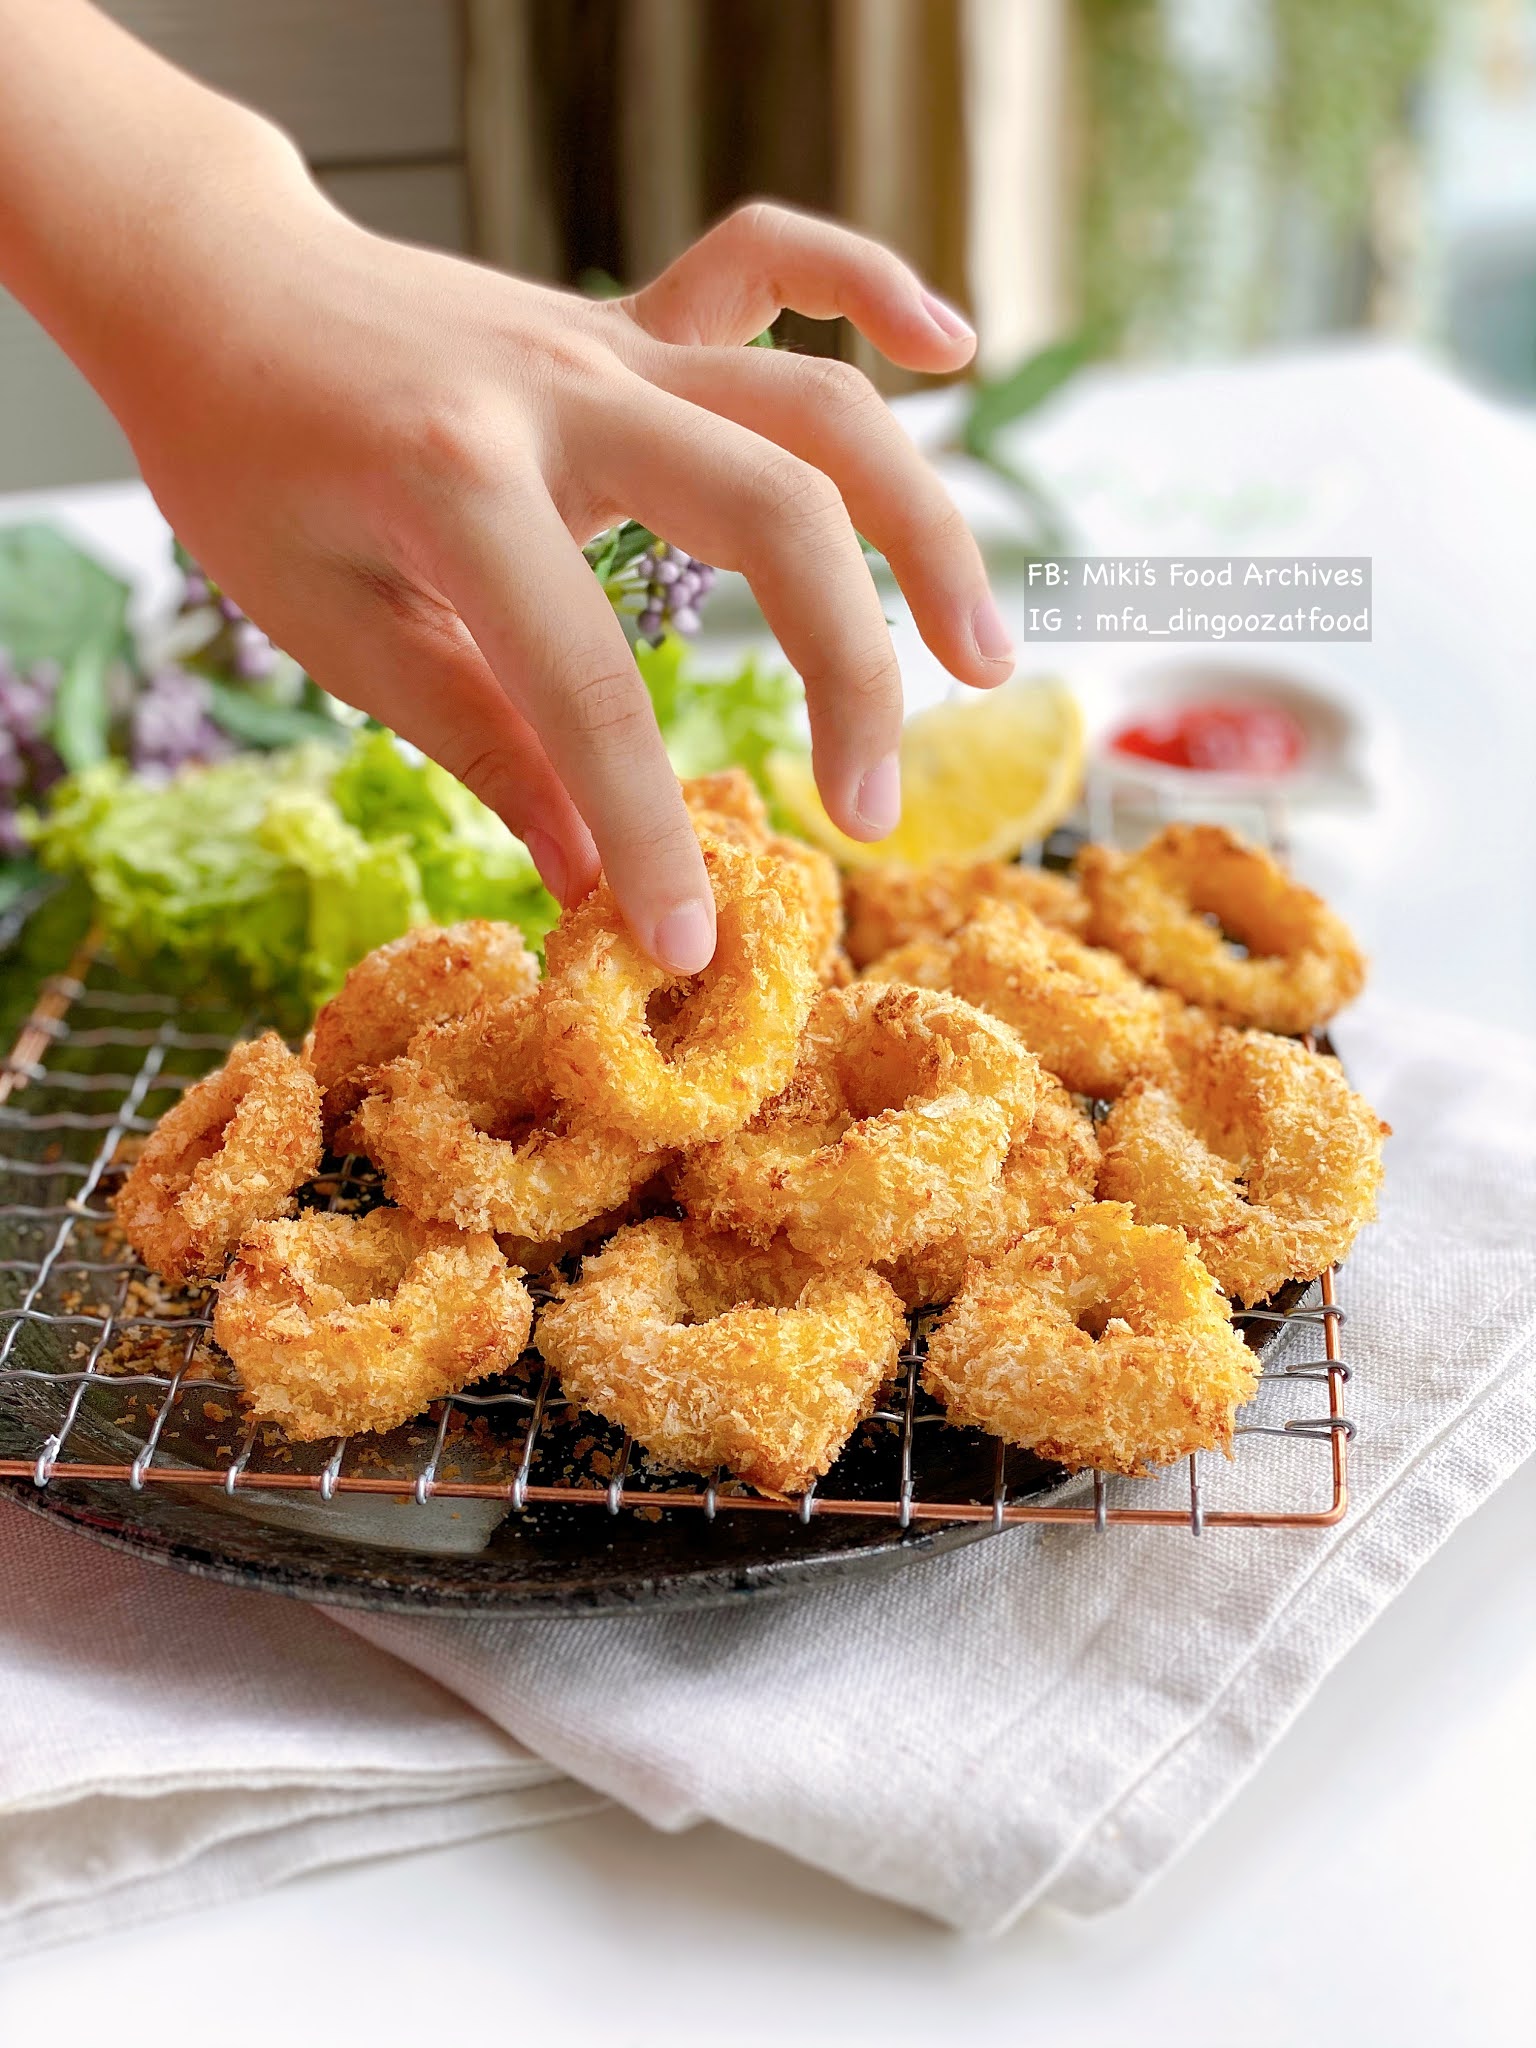 Miki's Food Archives : Air-Fried Calamari/ Squid Rings 香脆鱿鱼圈【免油炸】